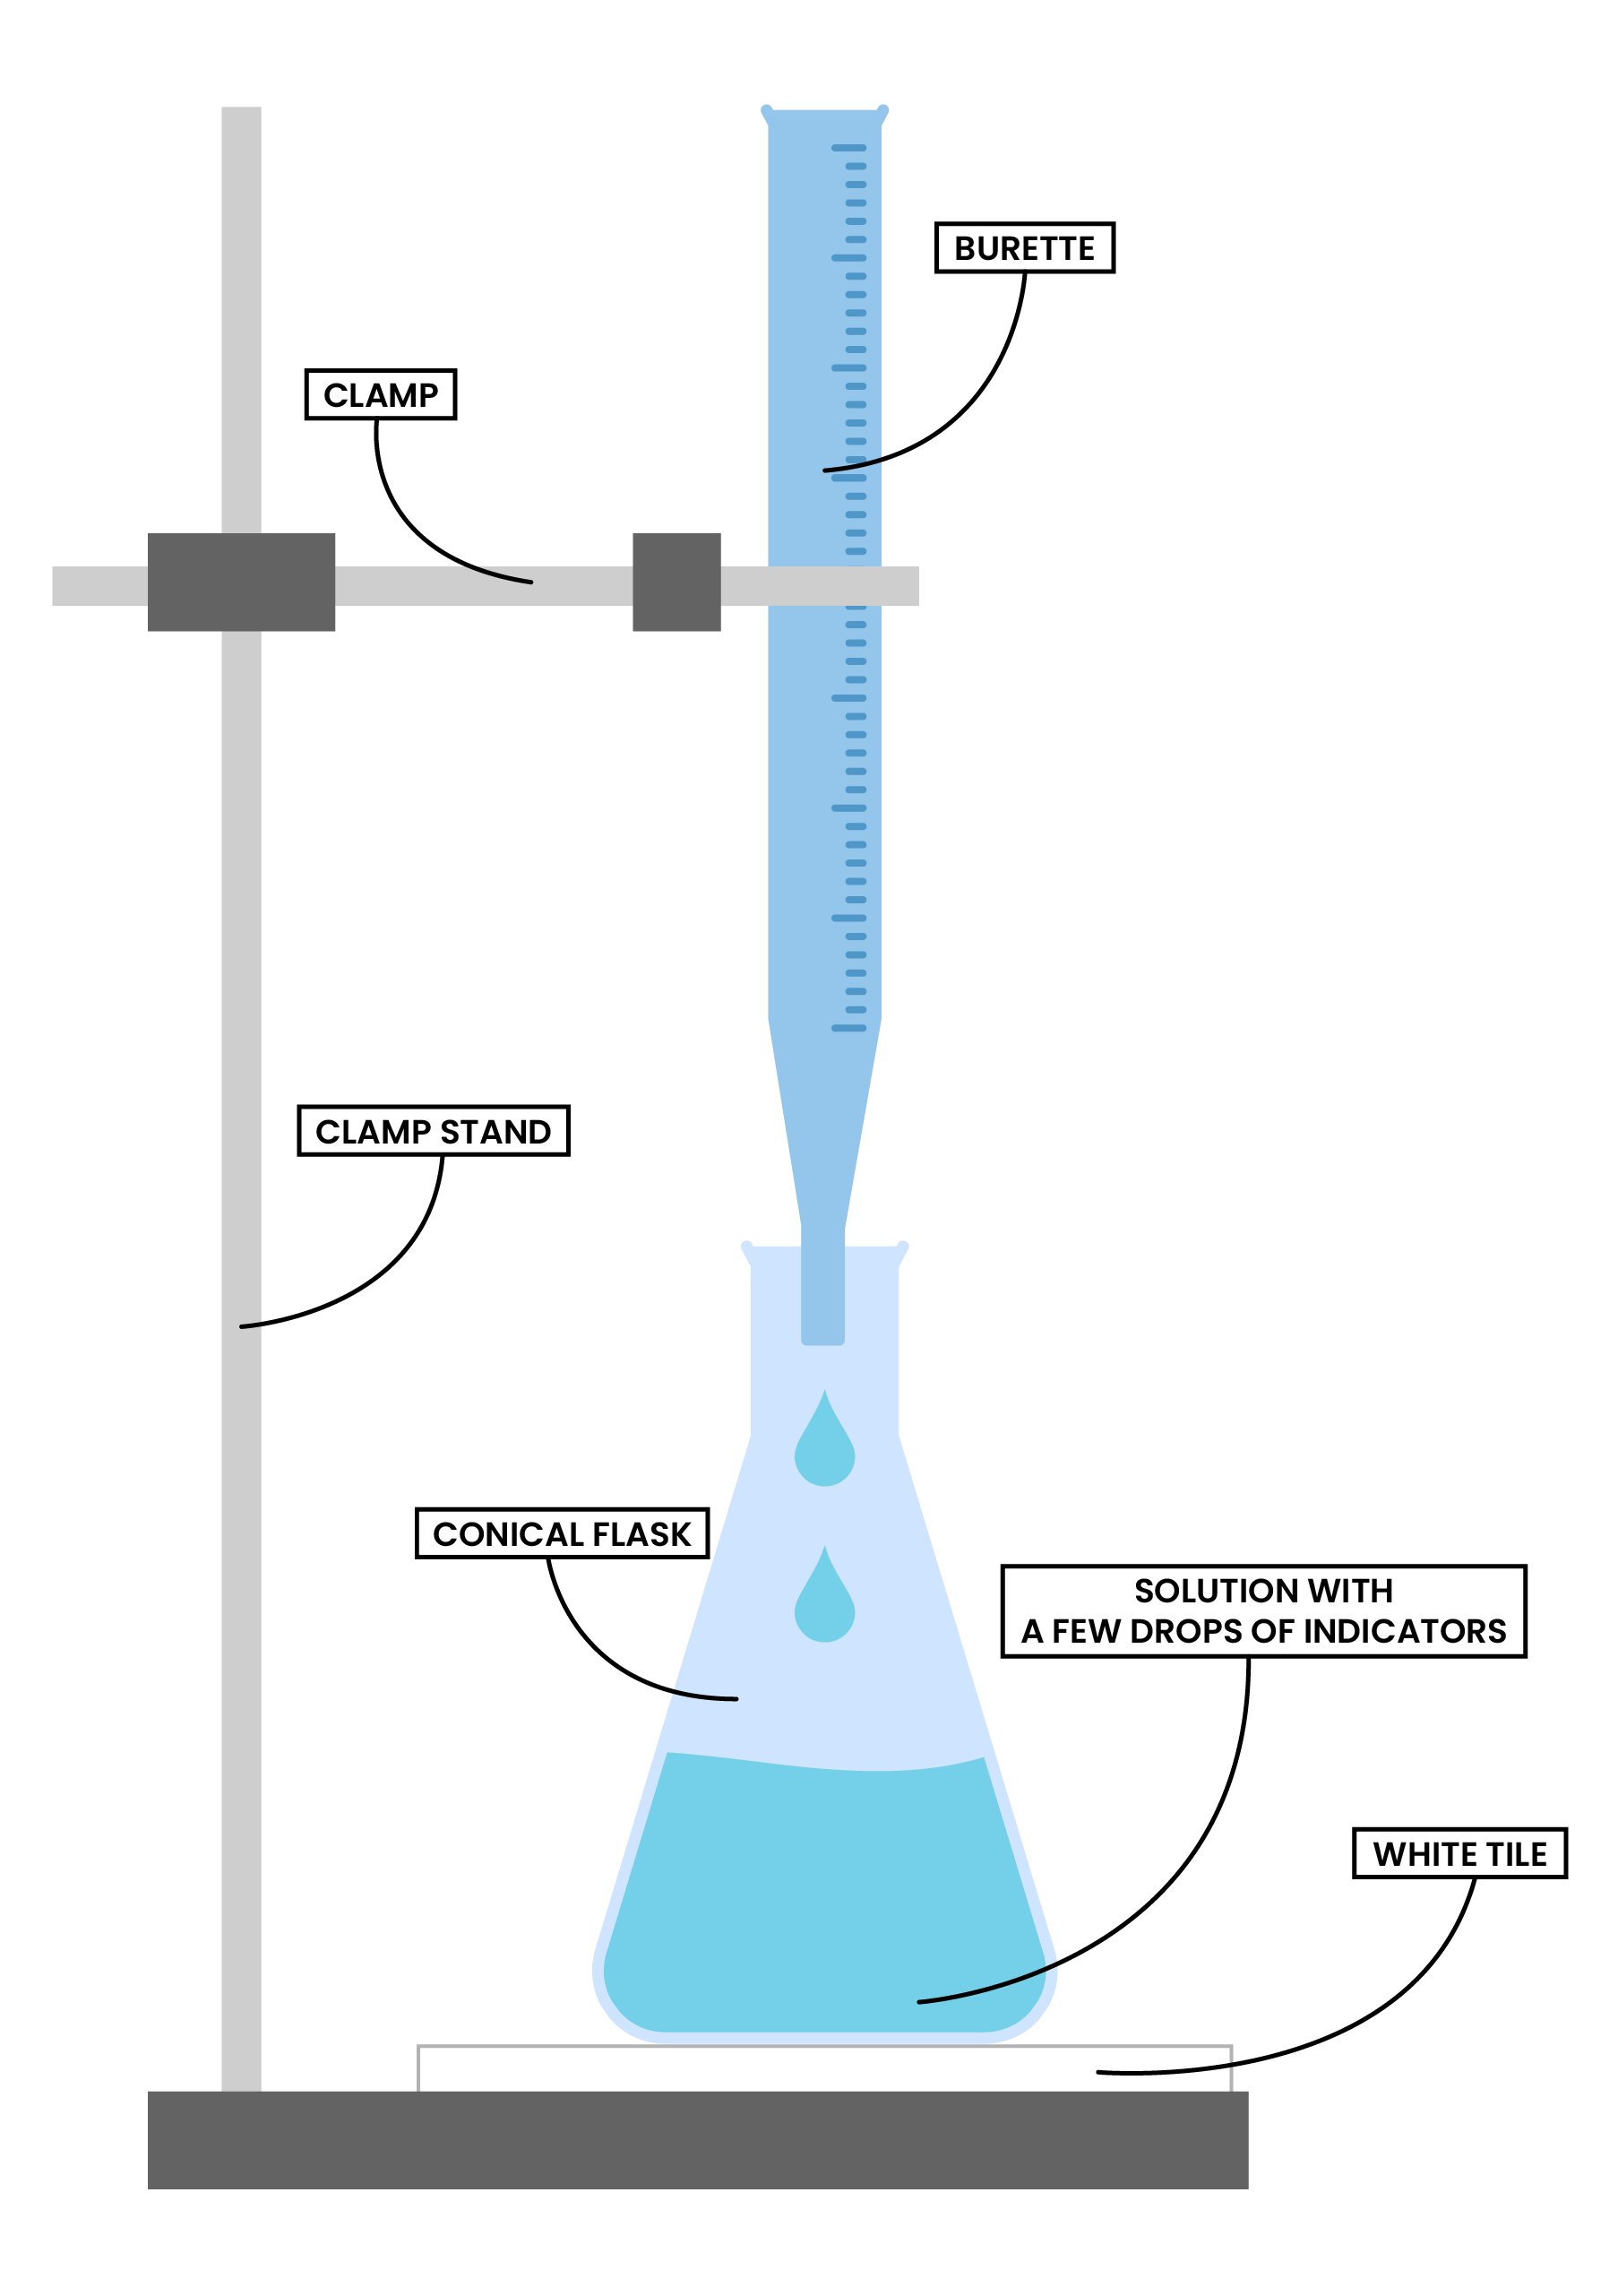 edexcel_igcse_chemistry_topic 15_acids, alkalis, and titrations_004_titration apparatus setup diagram labelled burette